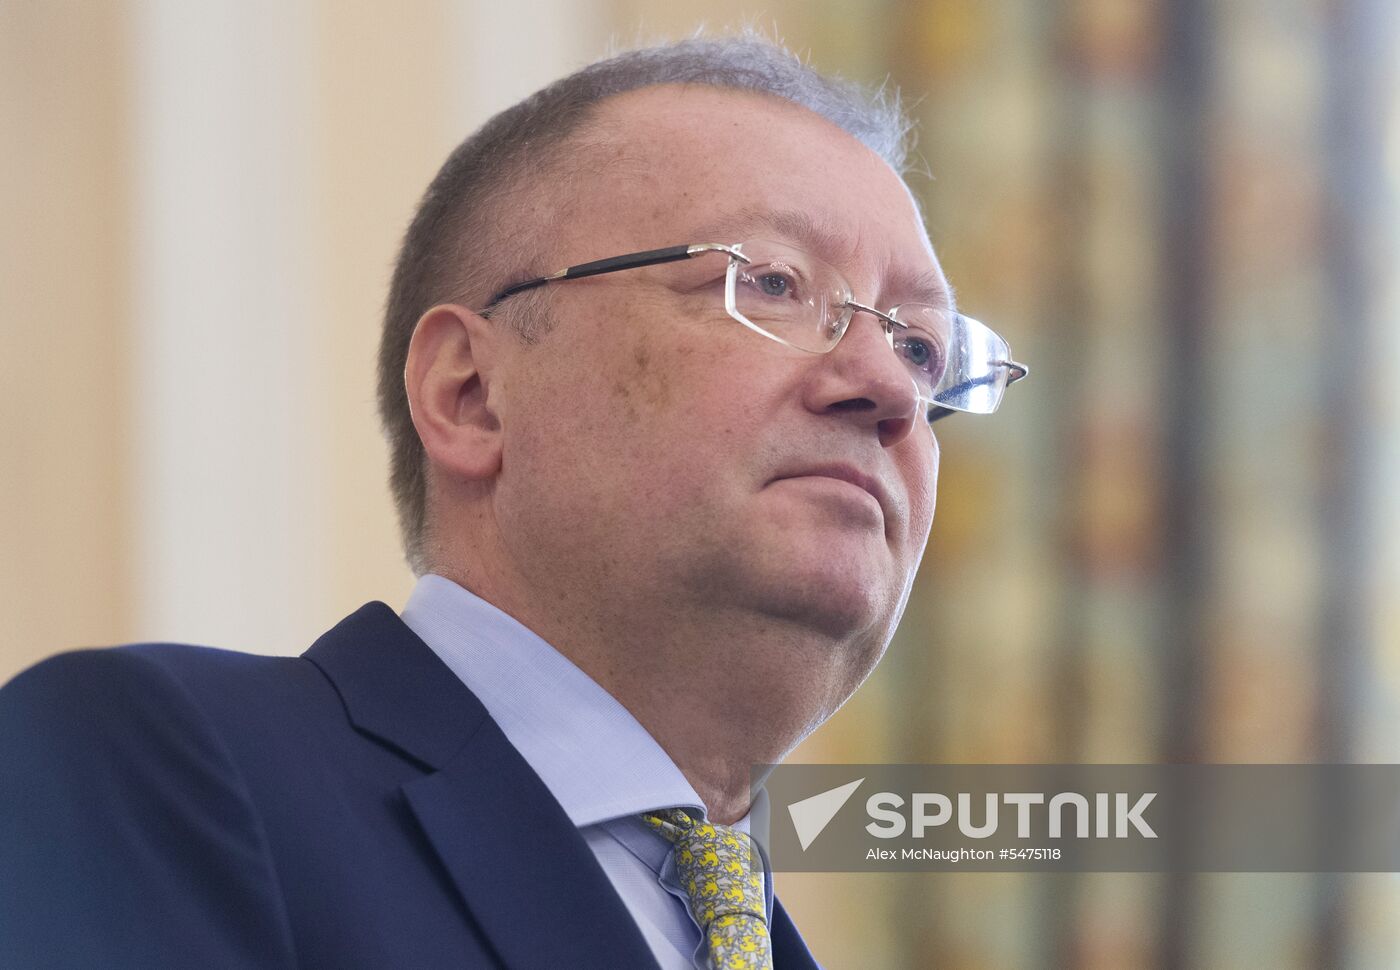 Russian Ambassador to UK Alexander Yakovenko's news conference